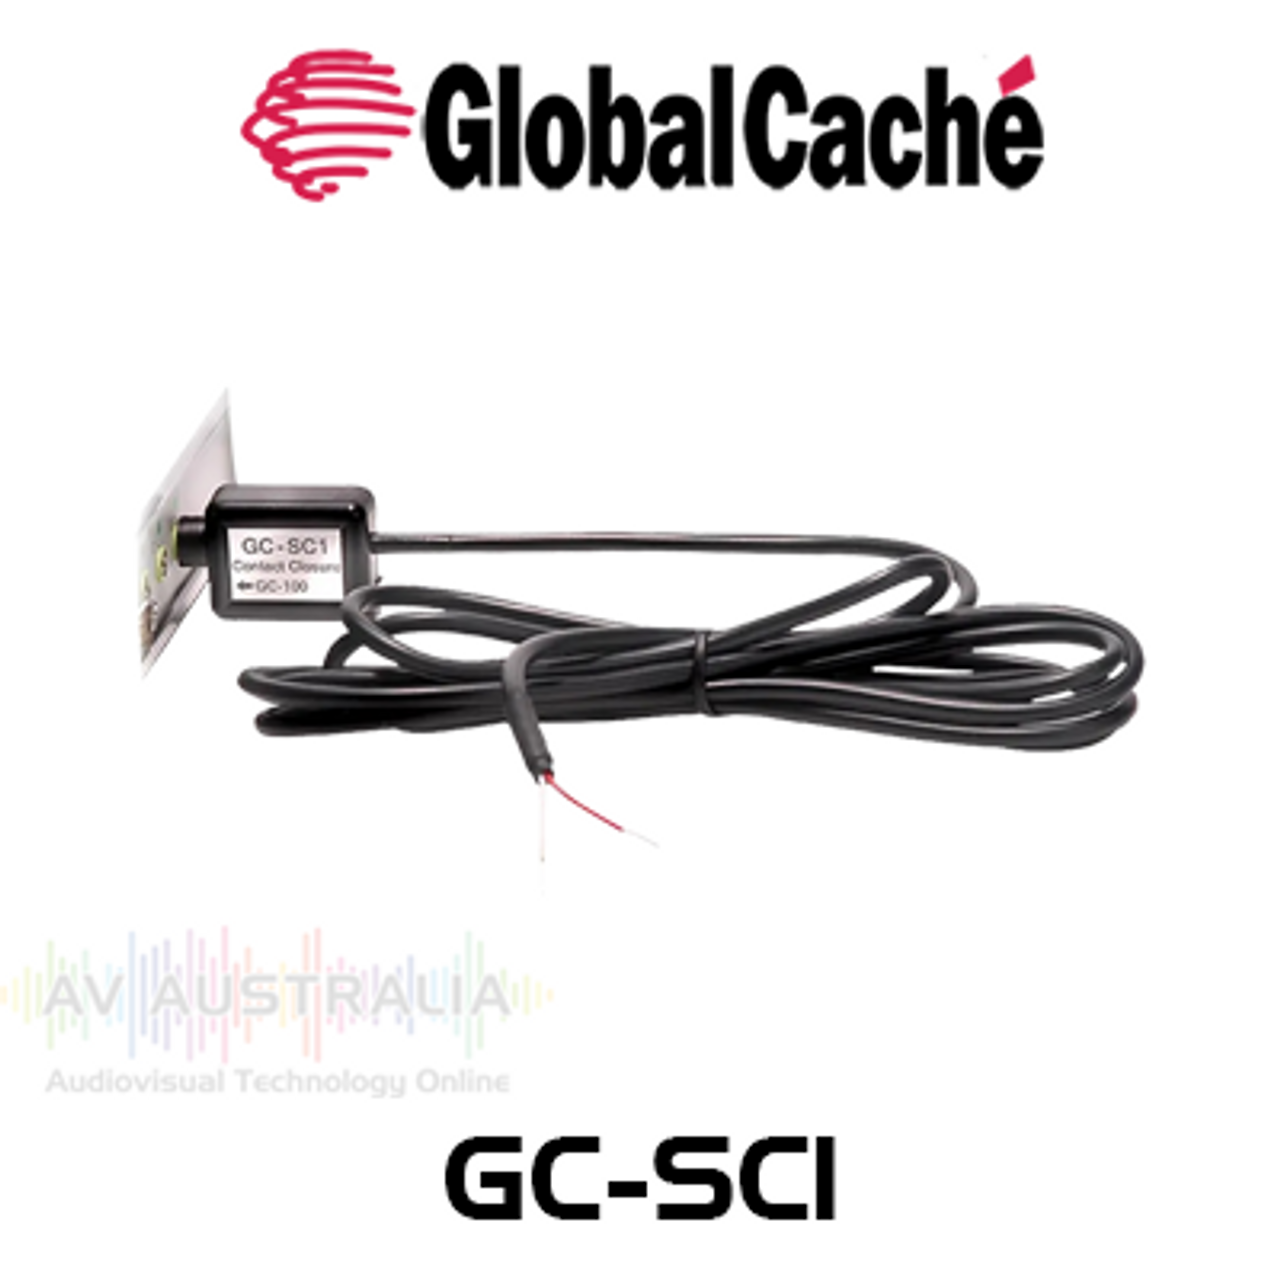 Global Cache GC-SC1 Contact Closure Sensor